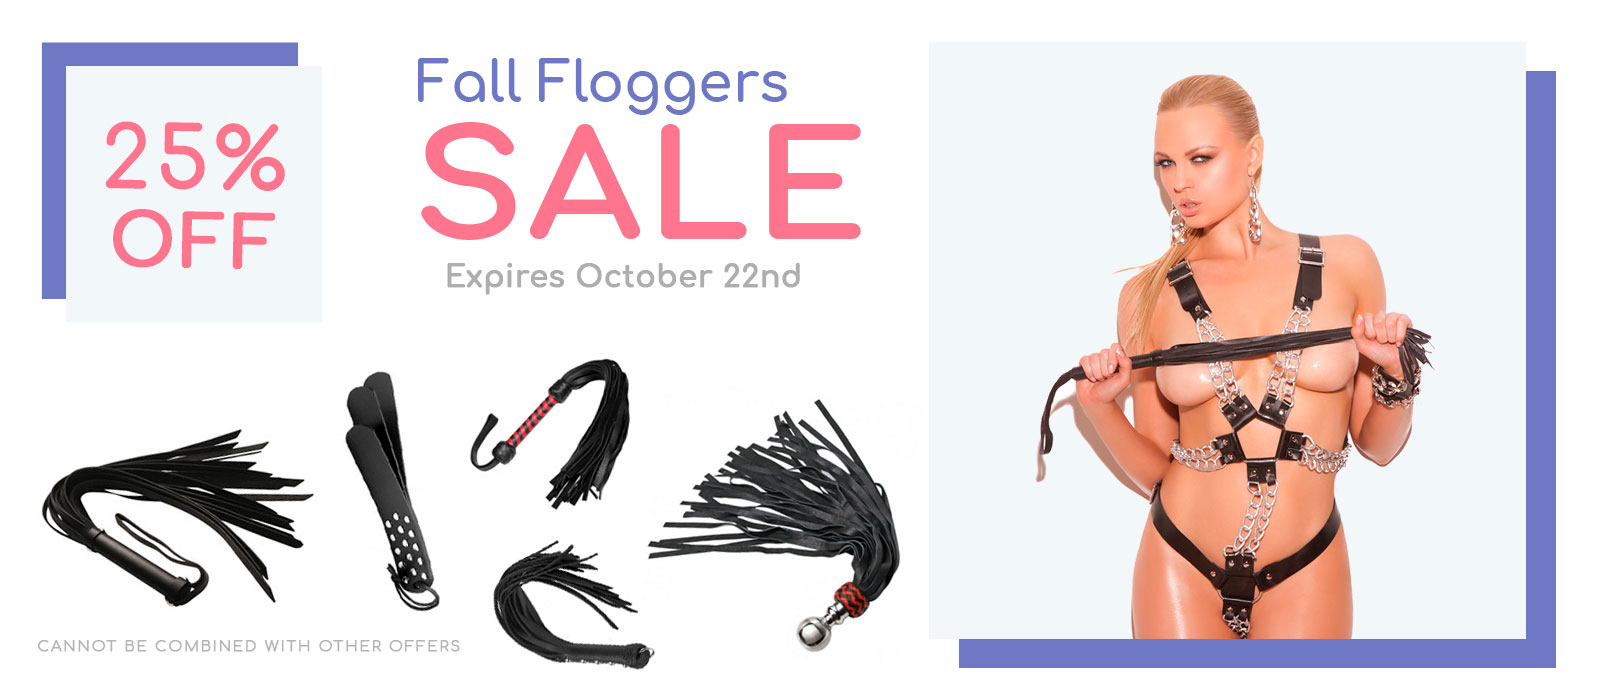 Flogger Sale